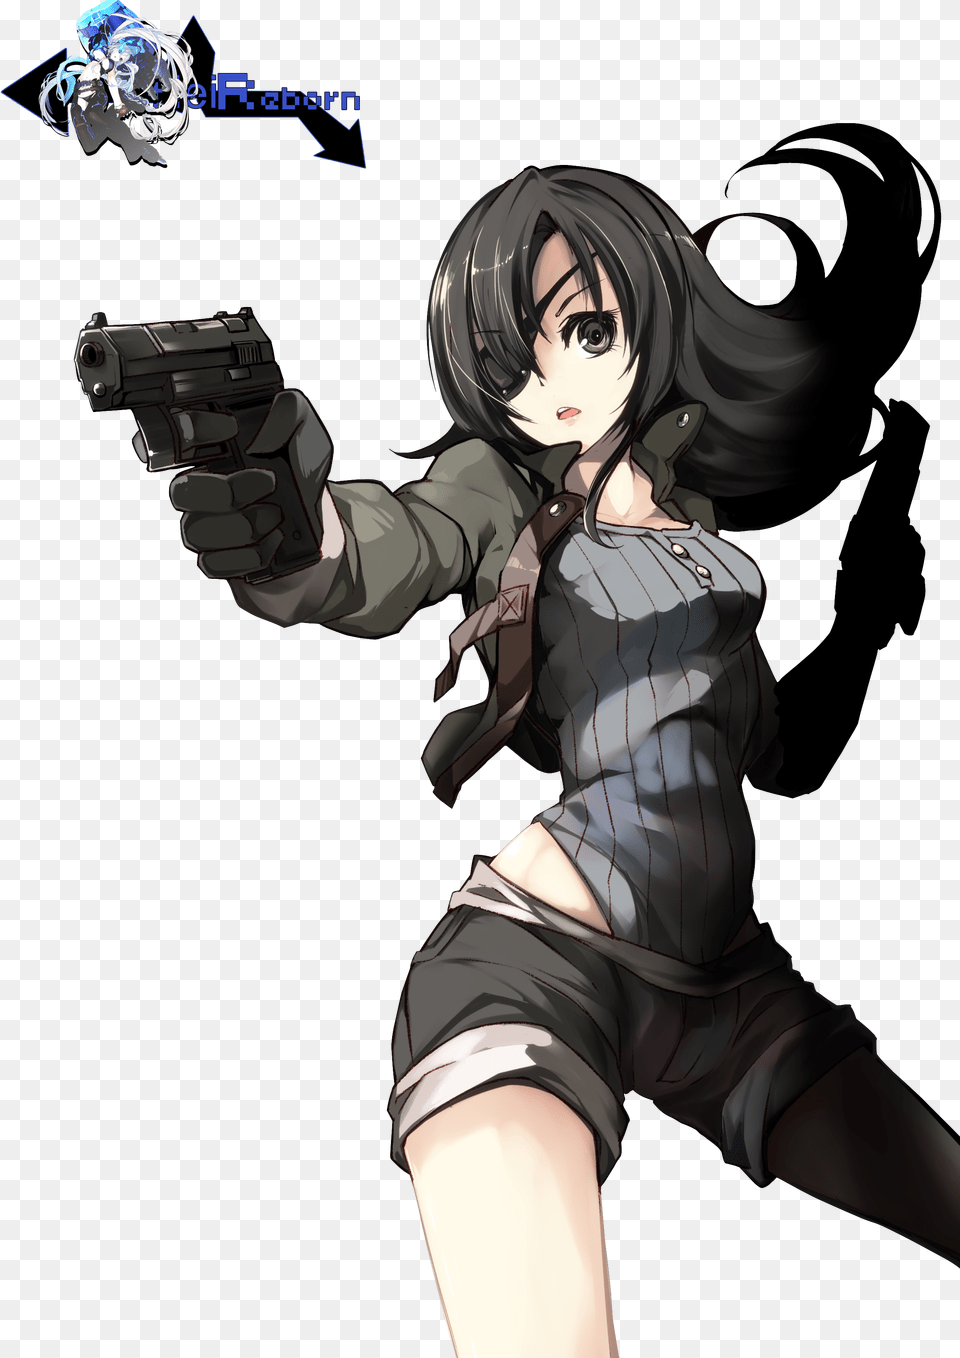 Original Gunner Girl Render By Heireborn Black Hair Anime Girl Pirate, Gun, Book, Weapon, Comics Free Transparent Png